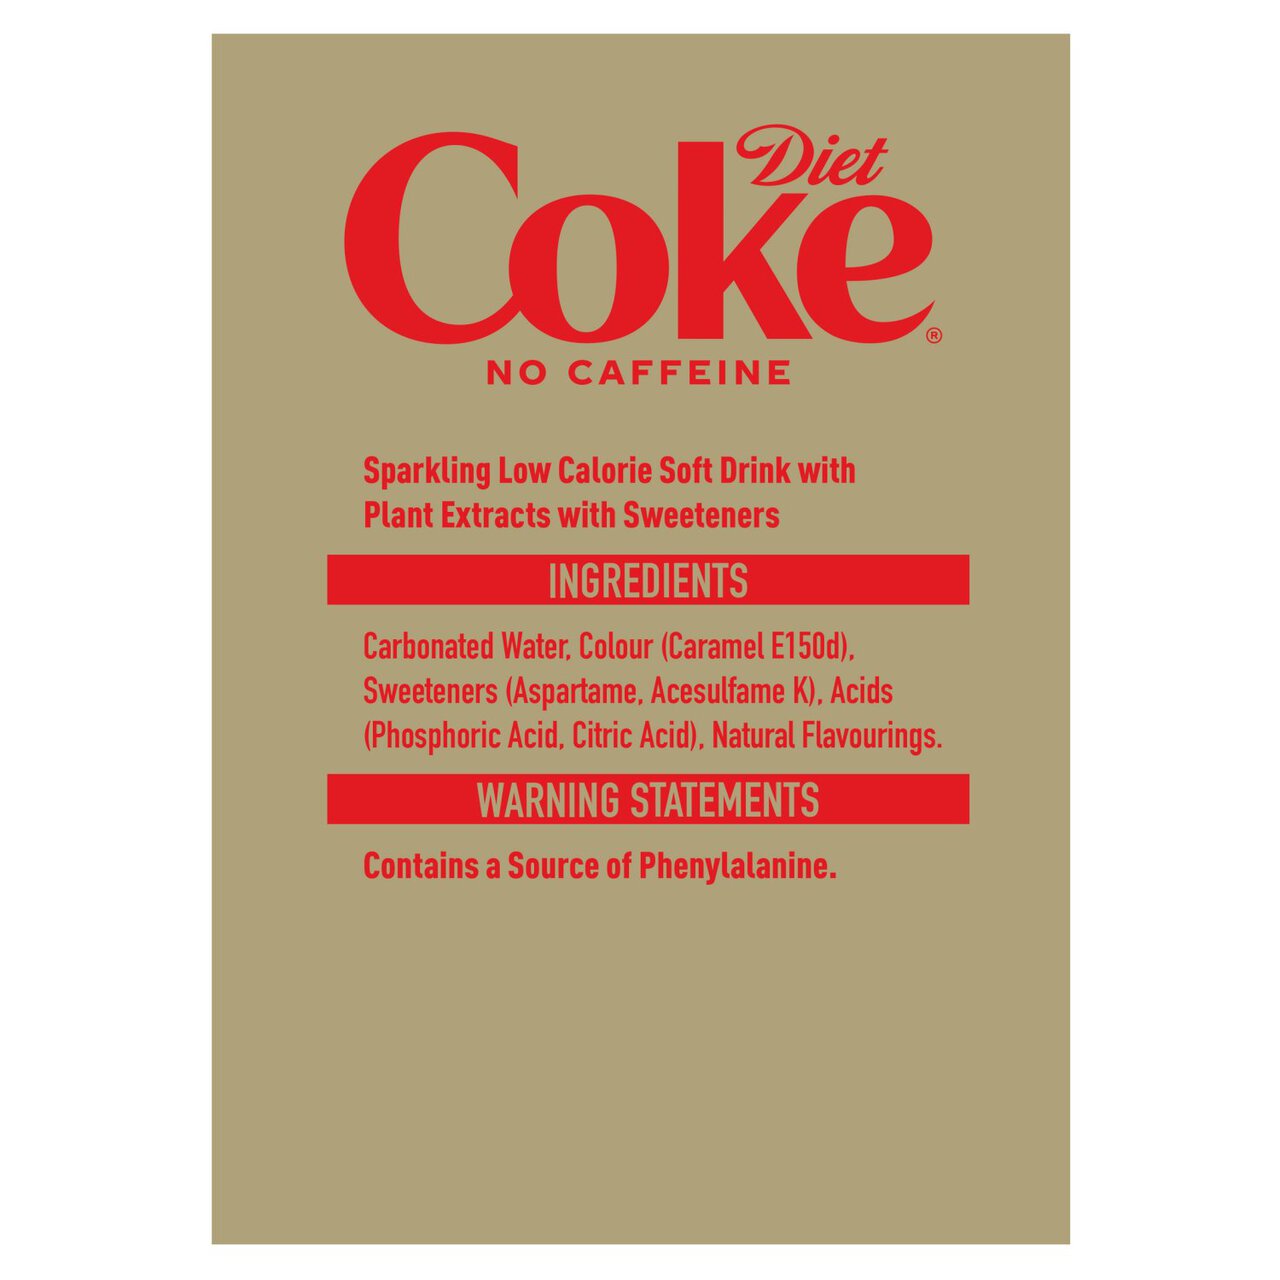 Coca Cola Caffeine Free 500ml